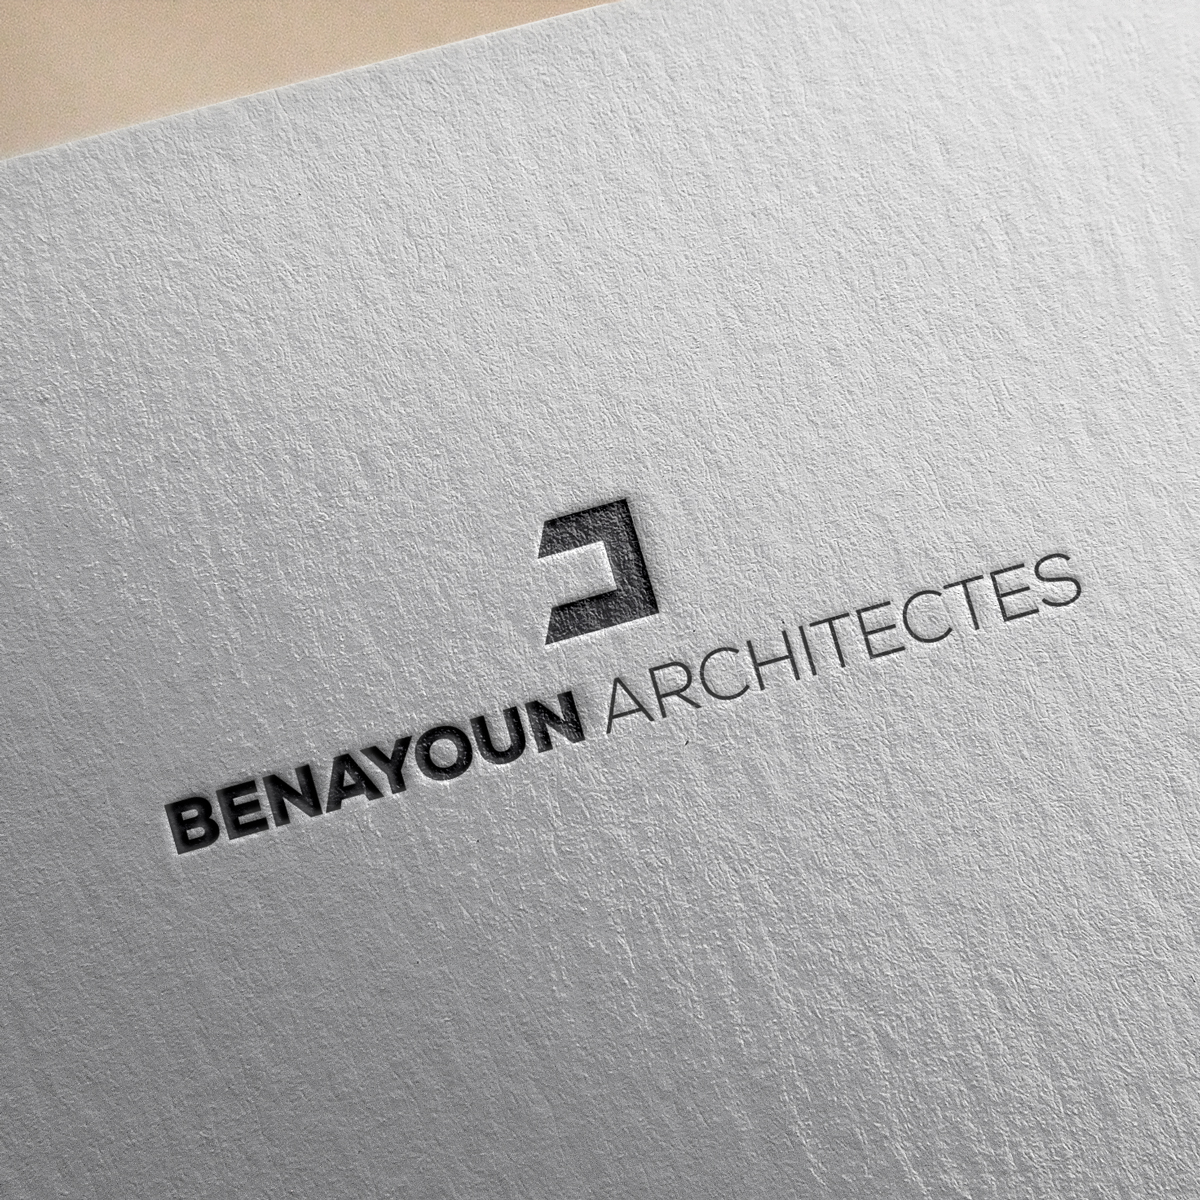 Benayoun architectes